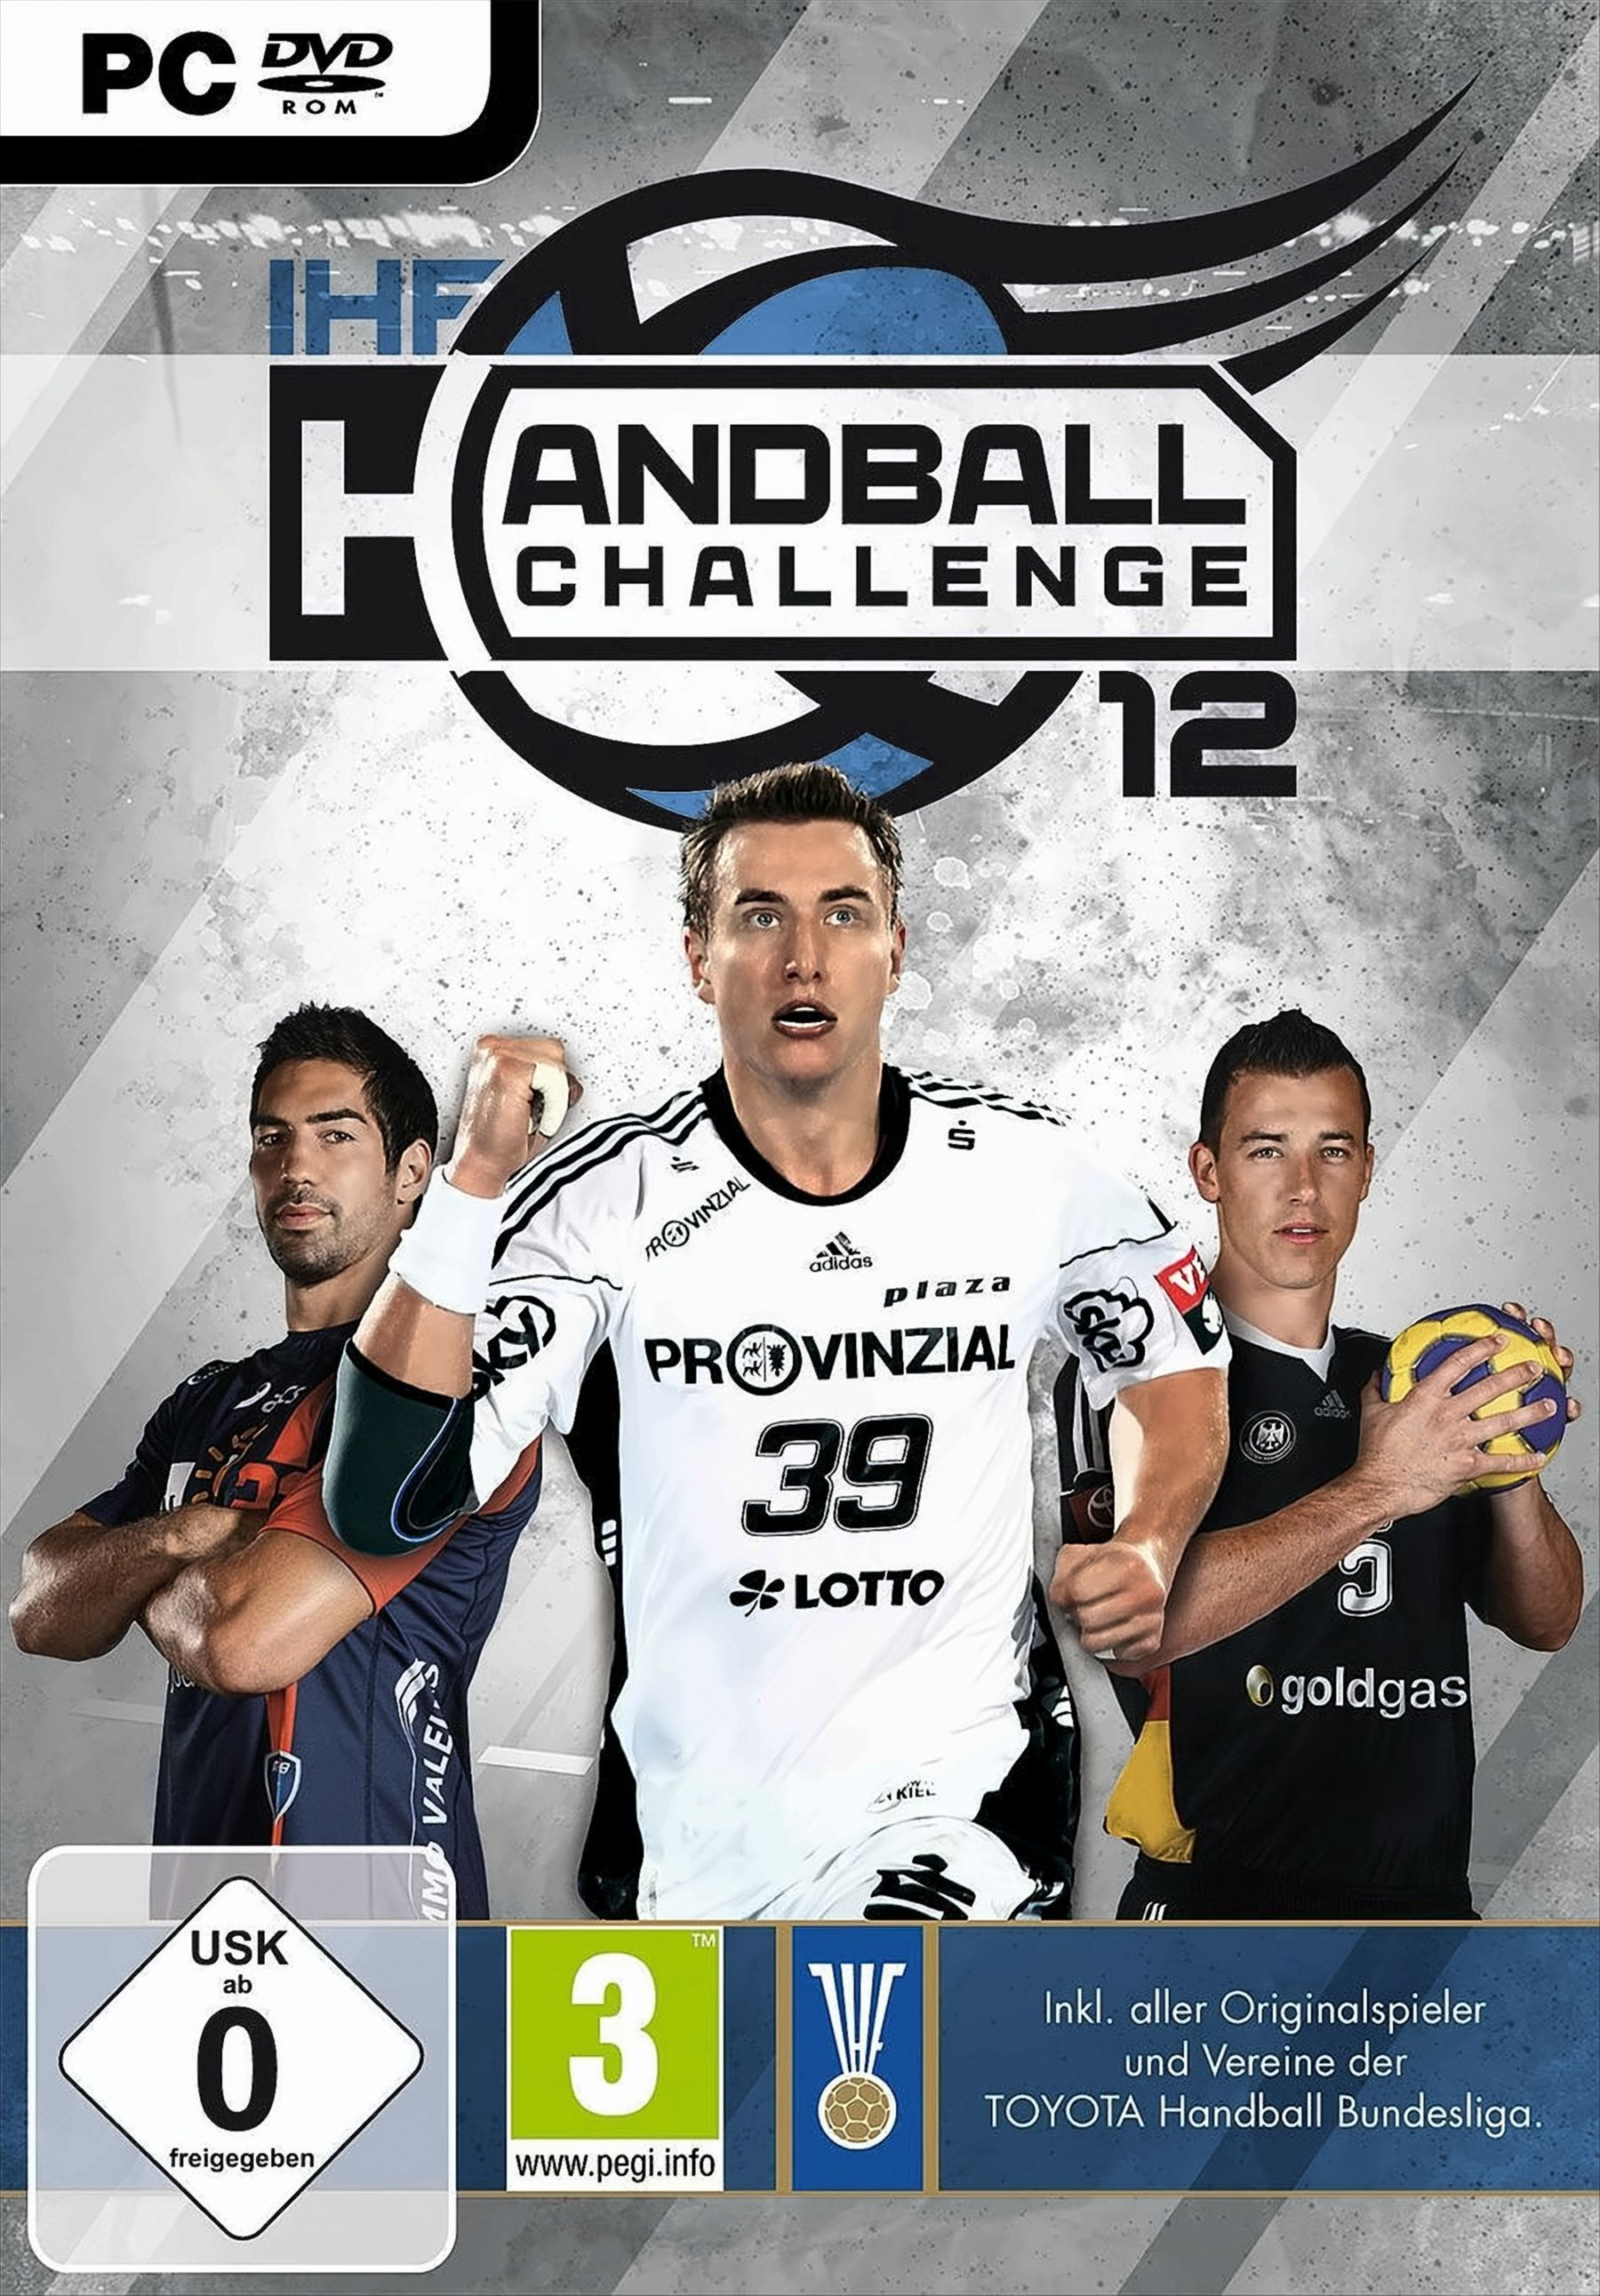 [PC] - [PC] Challenge 12 IHF Handball -